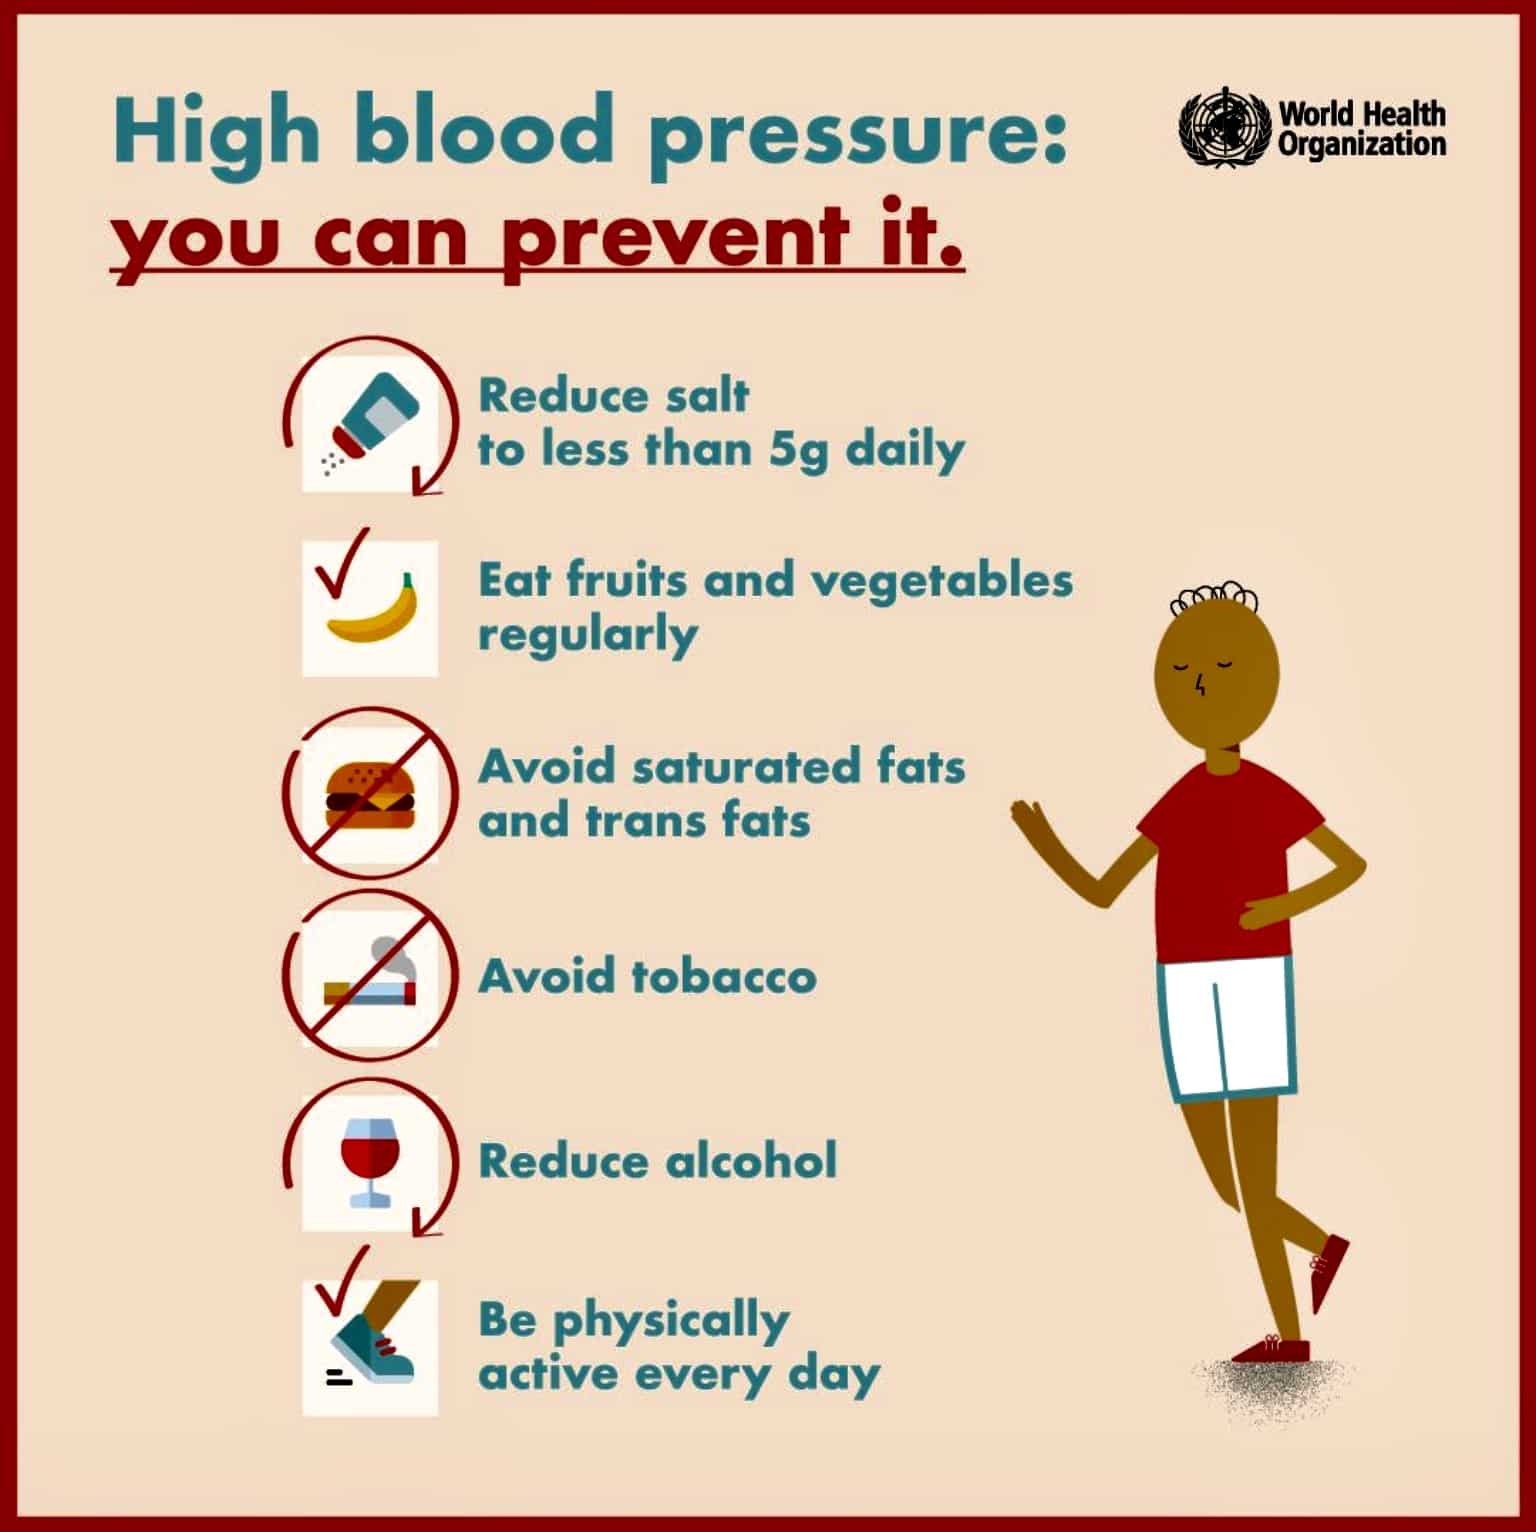 Hypertension: When Blood Pressure Goes Up